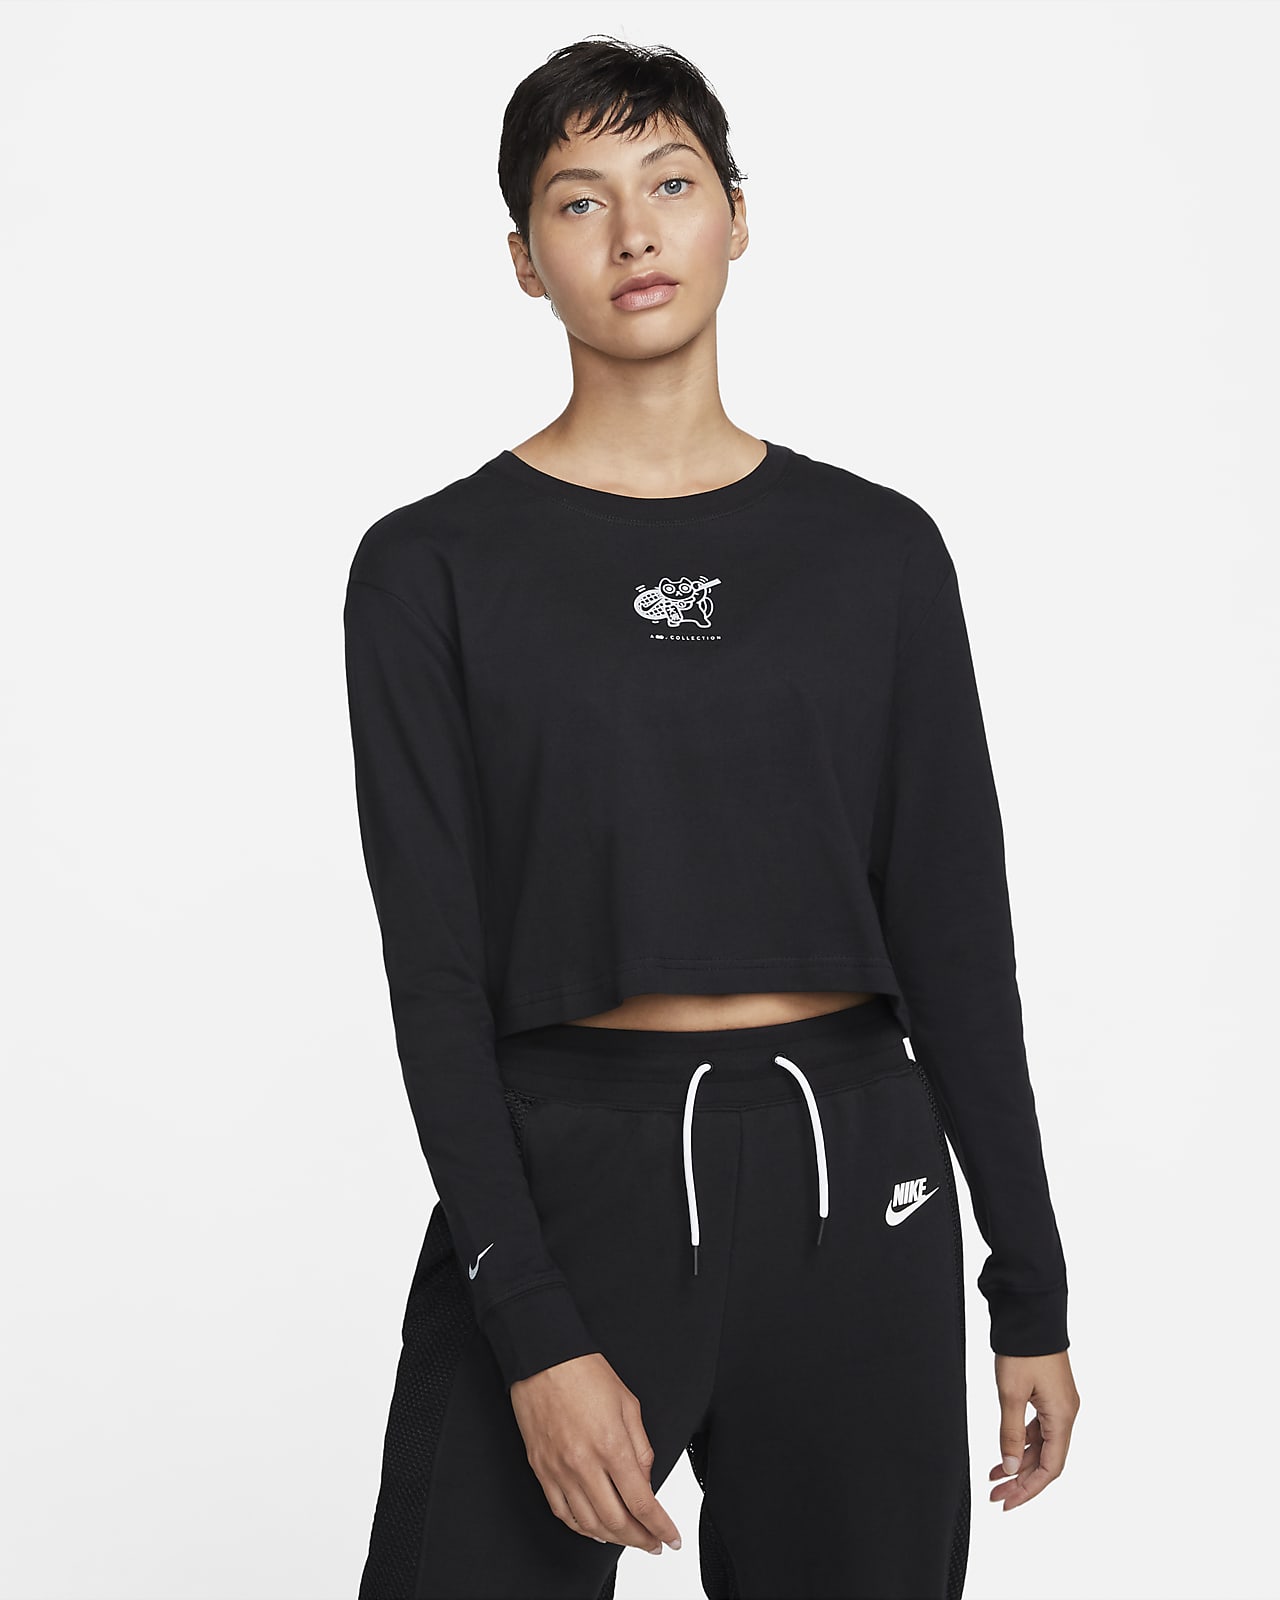 Naomi Osaka Langarm-Kurz-T-Shirt für Damen